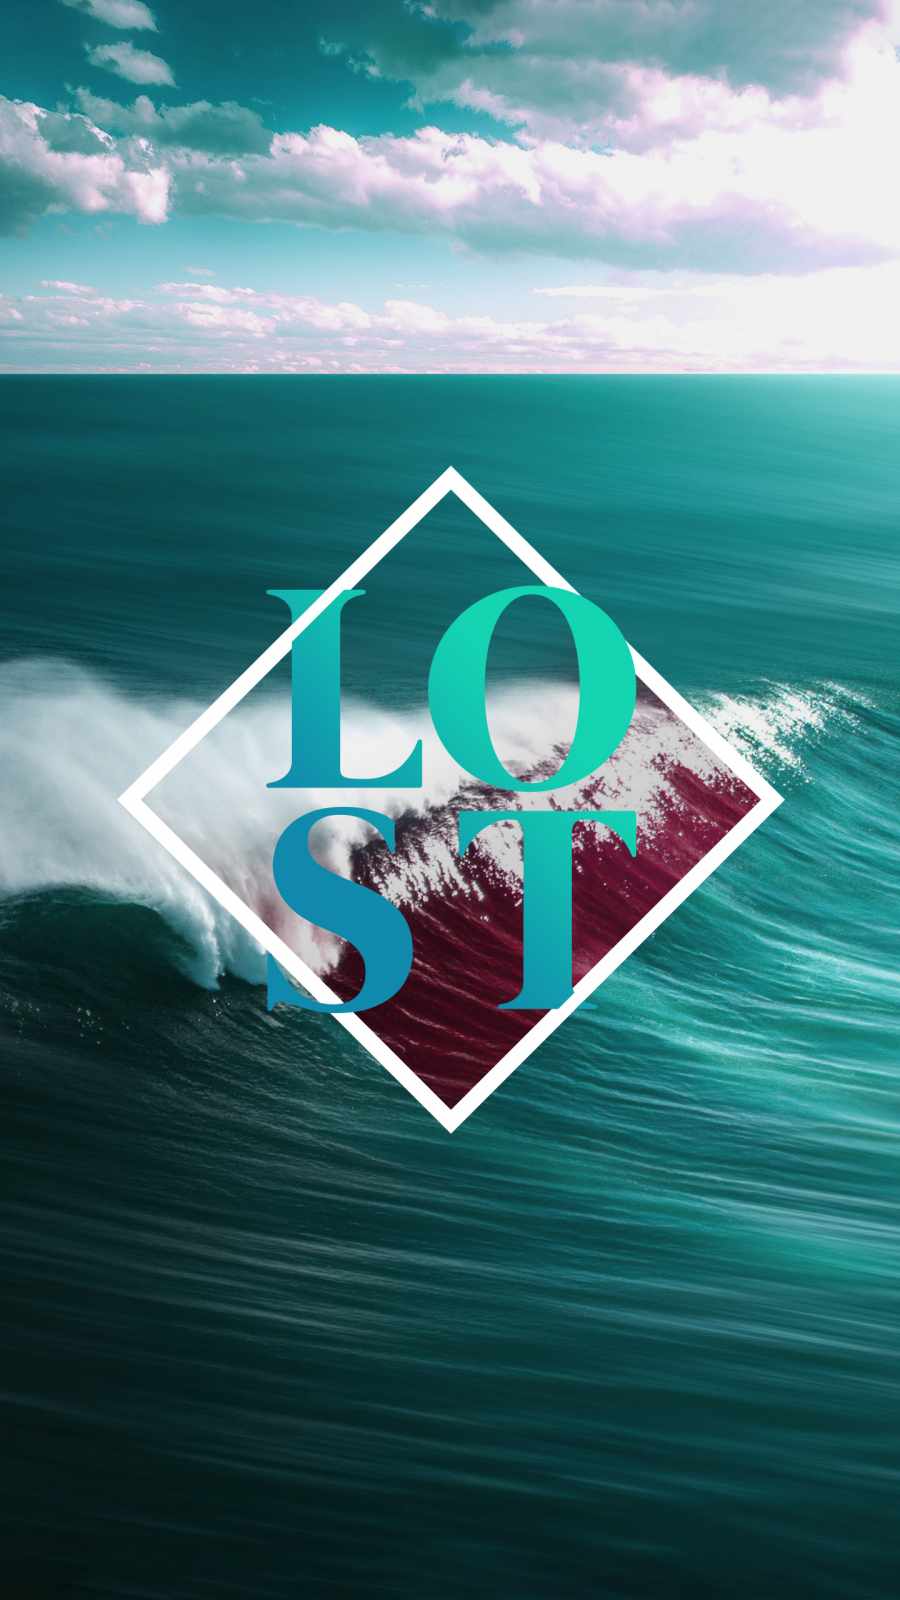 Lost in The Ocean iPhone Wallpaper HD